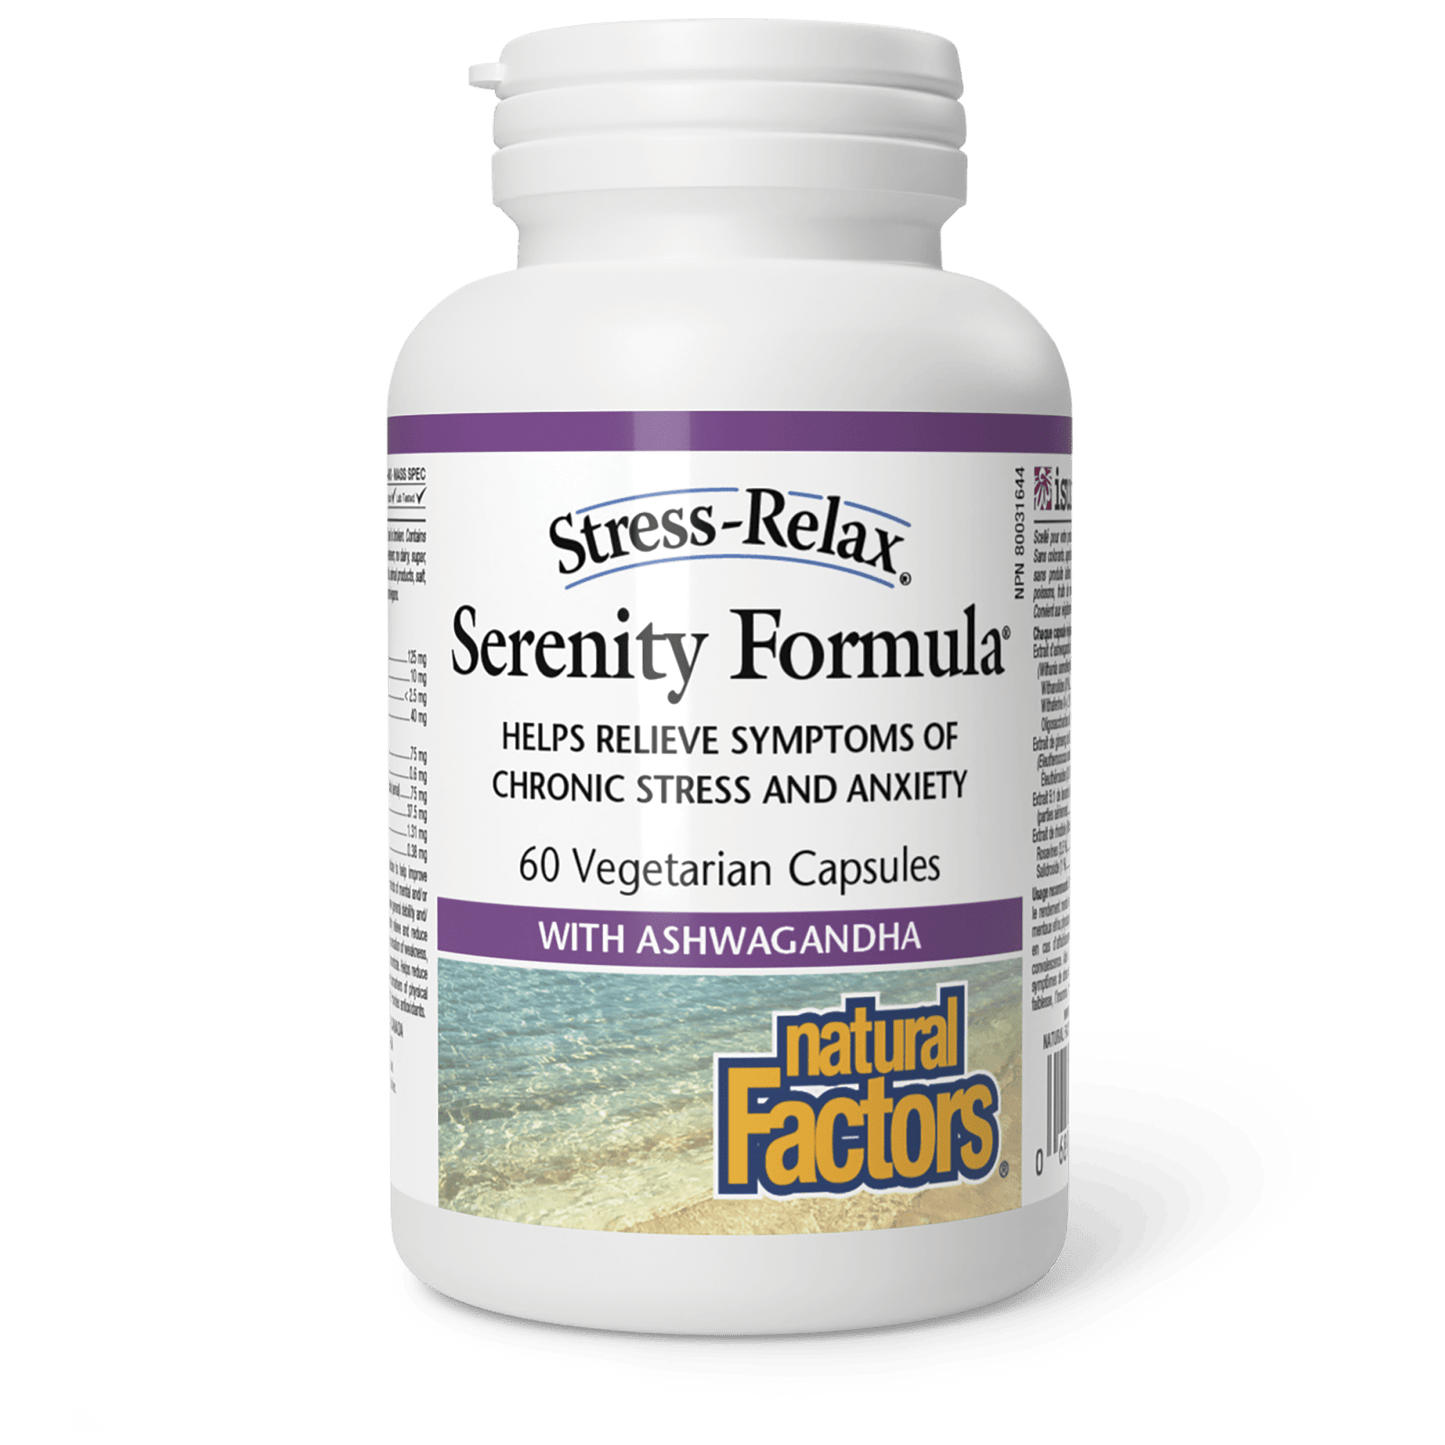 Serenity Formula, Stress-Relax, Natural Factors|v|image|2834